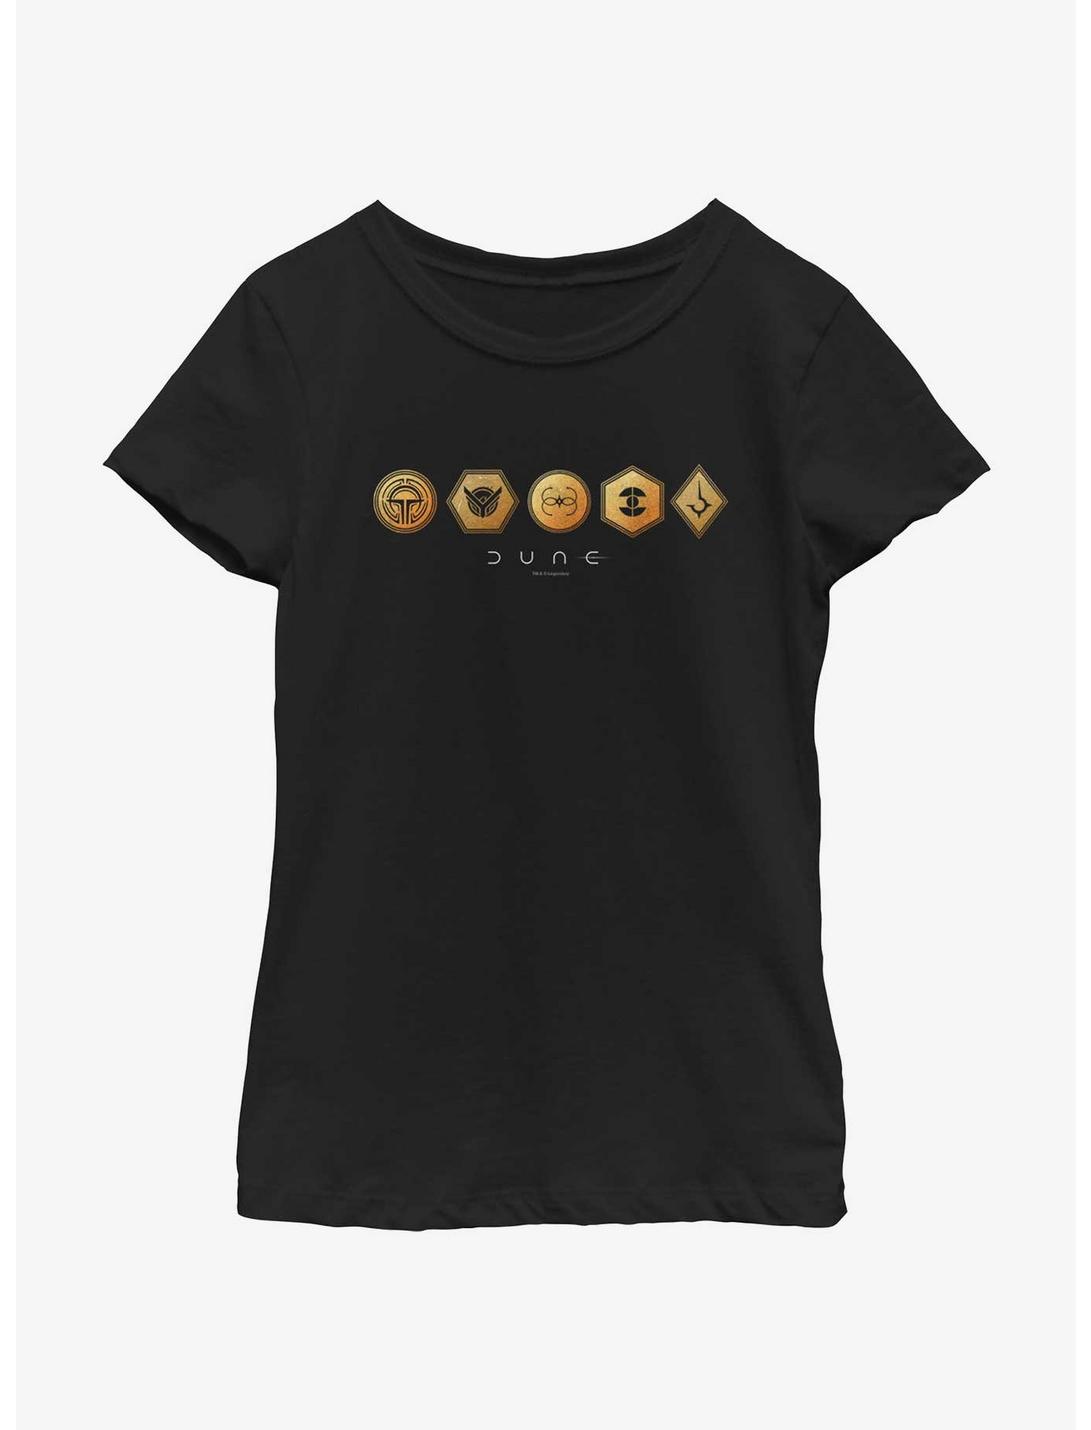 Dune: Part Two Emblems Youth Girls T-Shirt, BLACK, hi-res